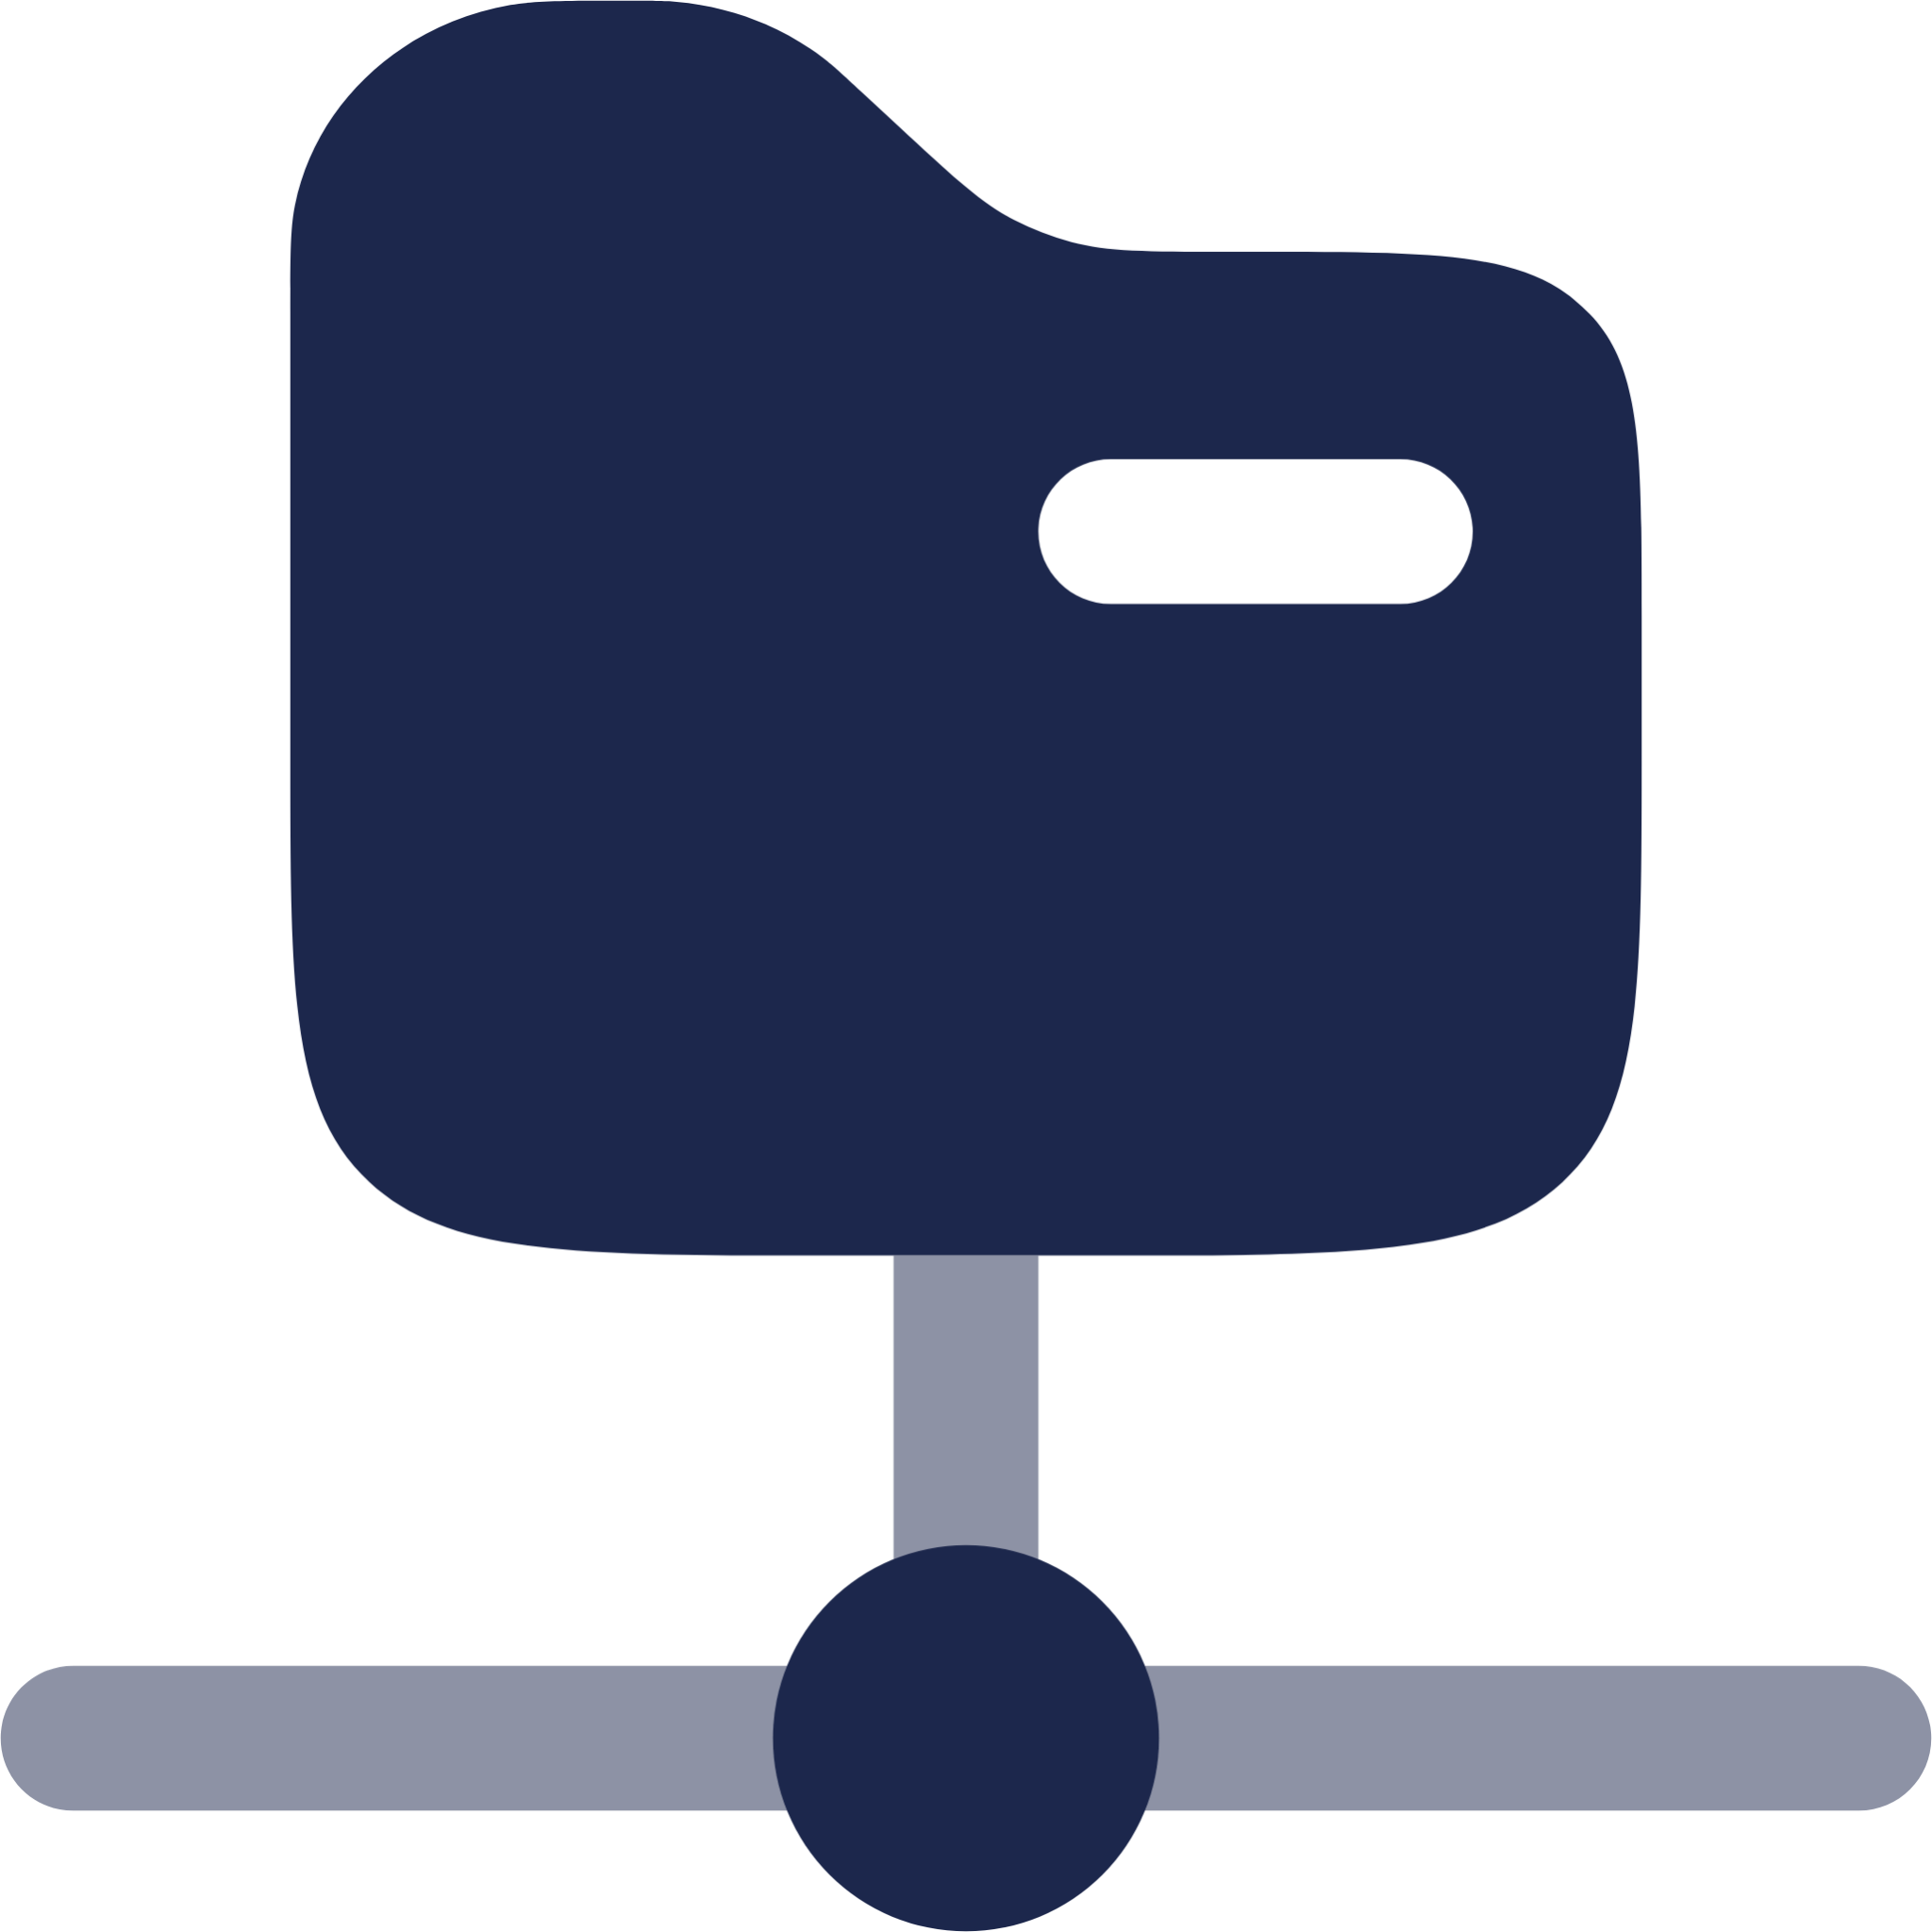 Folder Path Connect icon